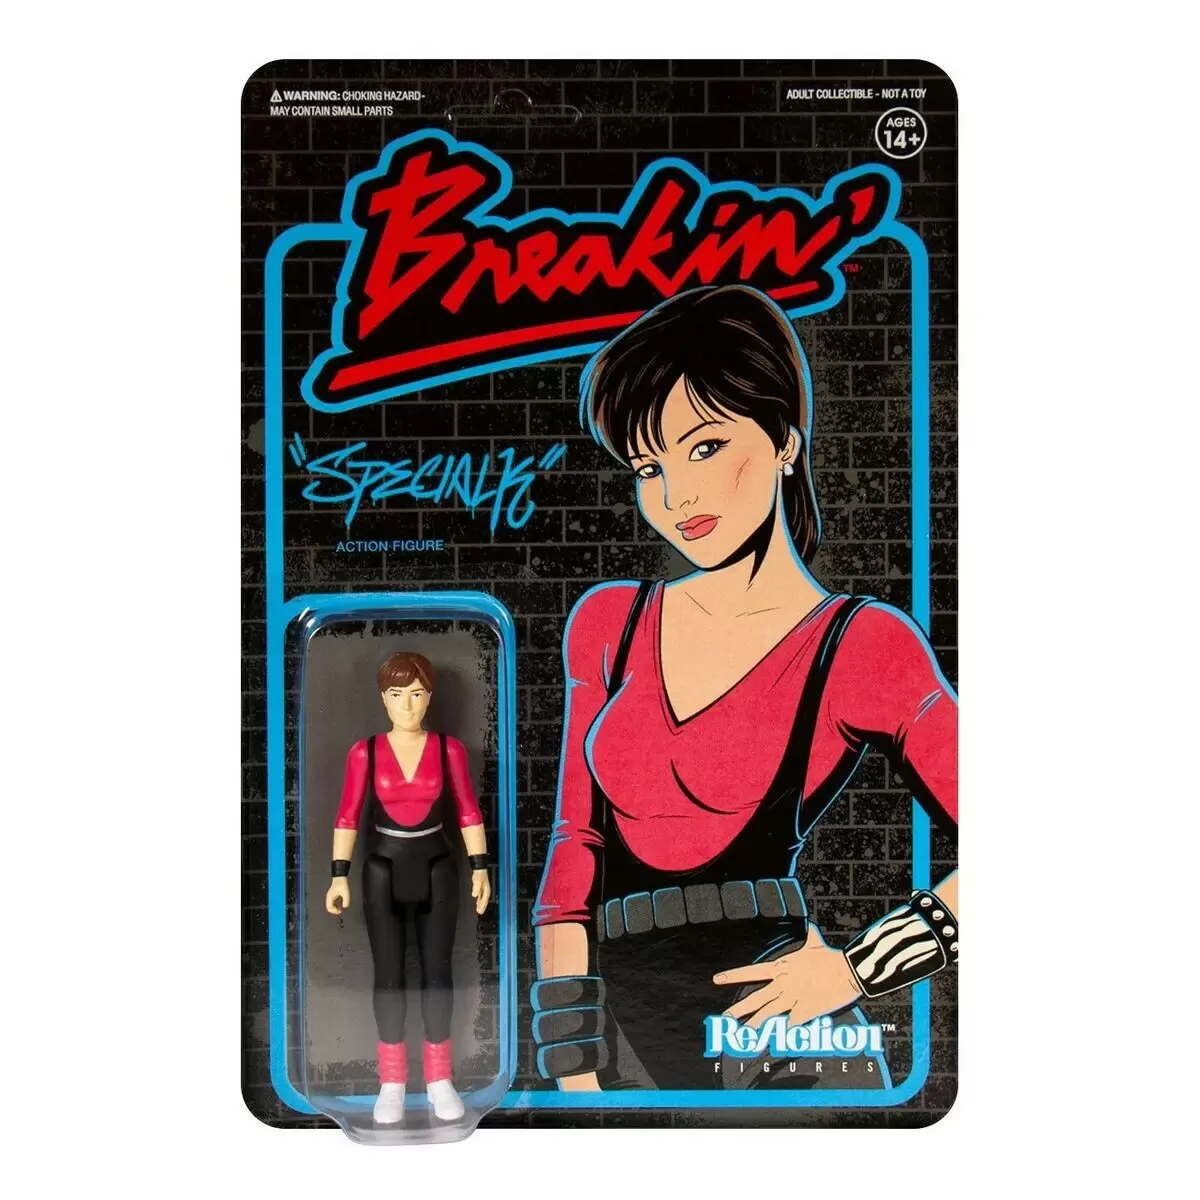 Breakin Special K Reaction Action Figure 2019 for sale online 